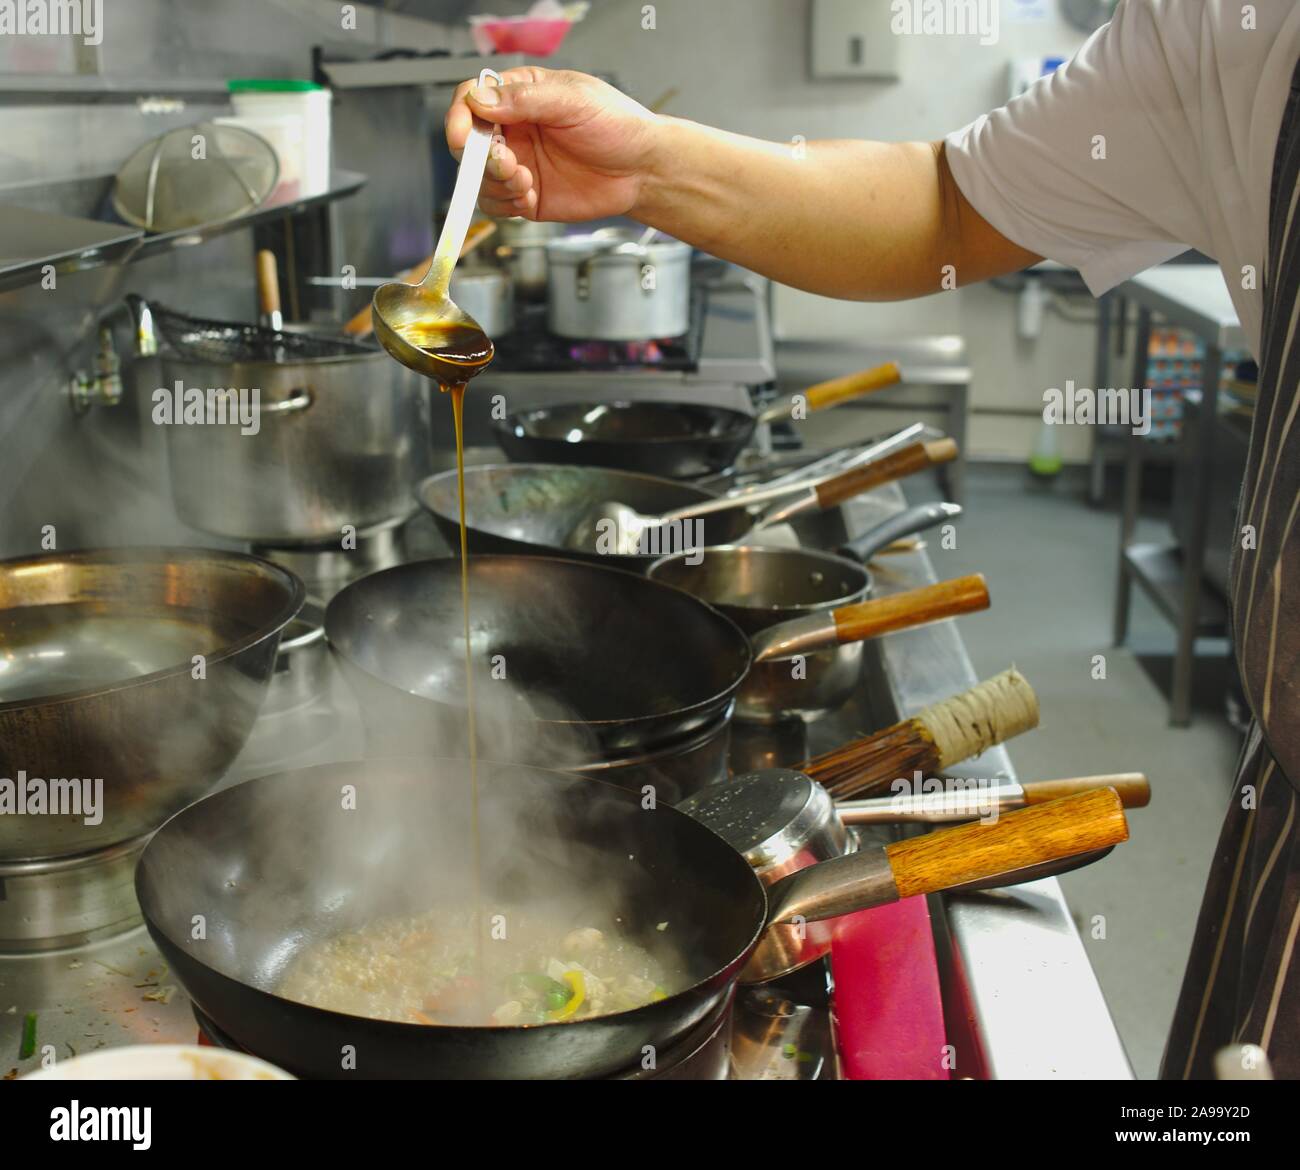 Thai restaurant kitchen detail, chef cooking with woks Stock Photo - Alamy